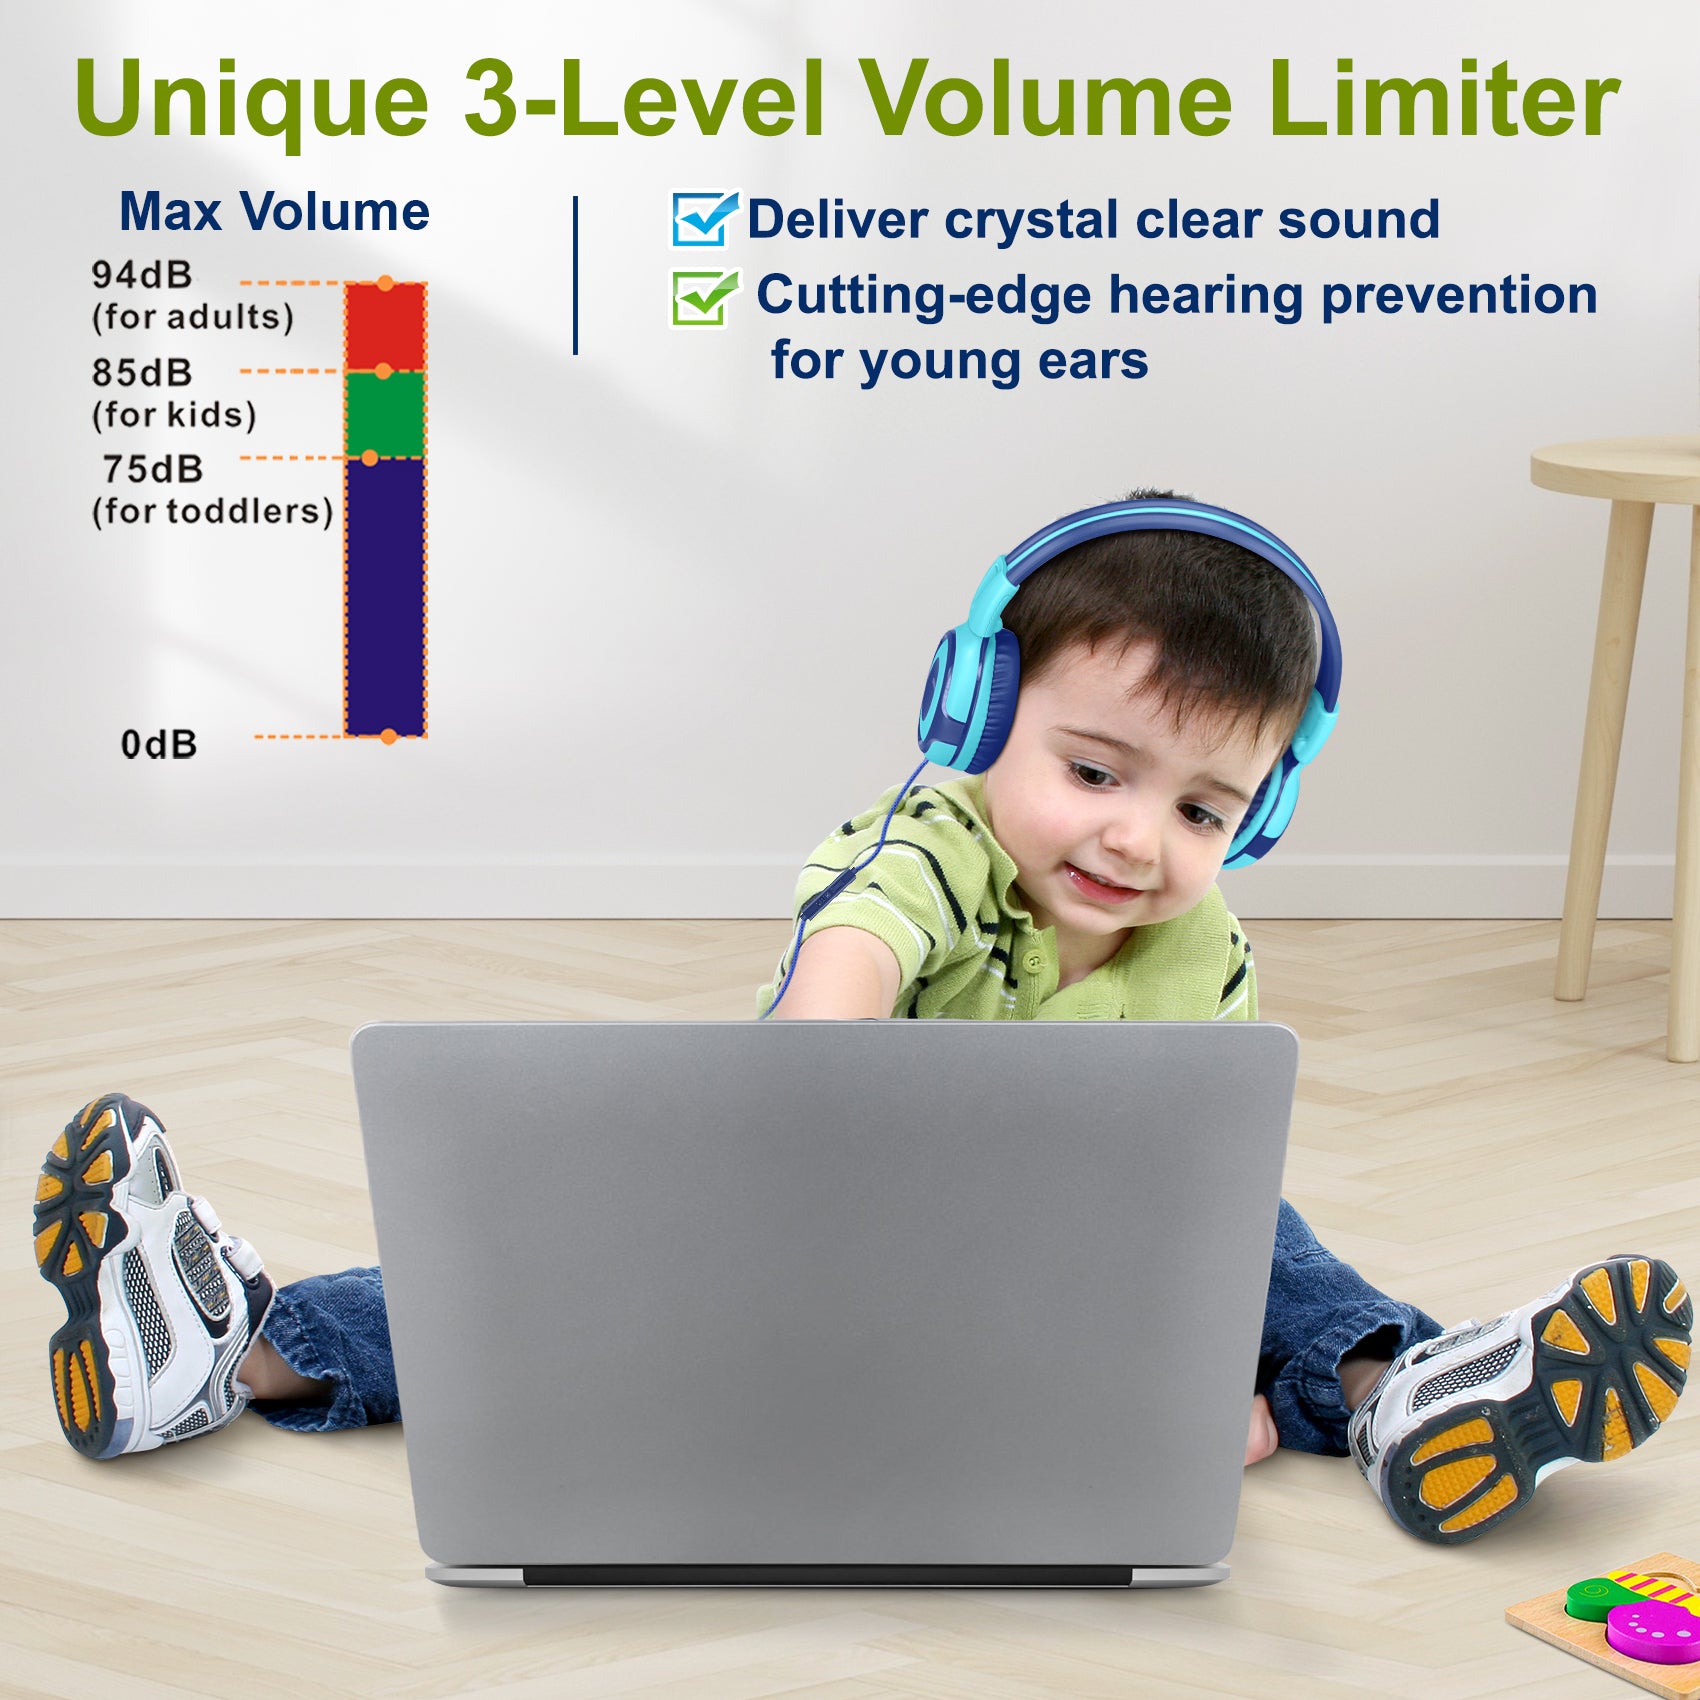 Simolio kids headphones have 3-level volume limiter to protect kids hearing